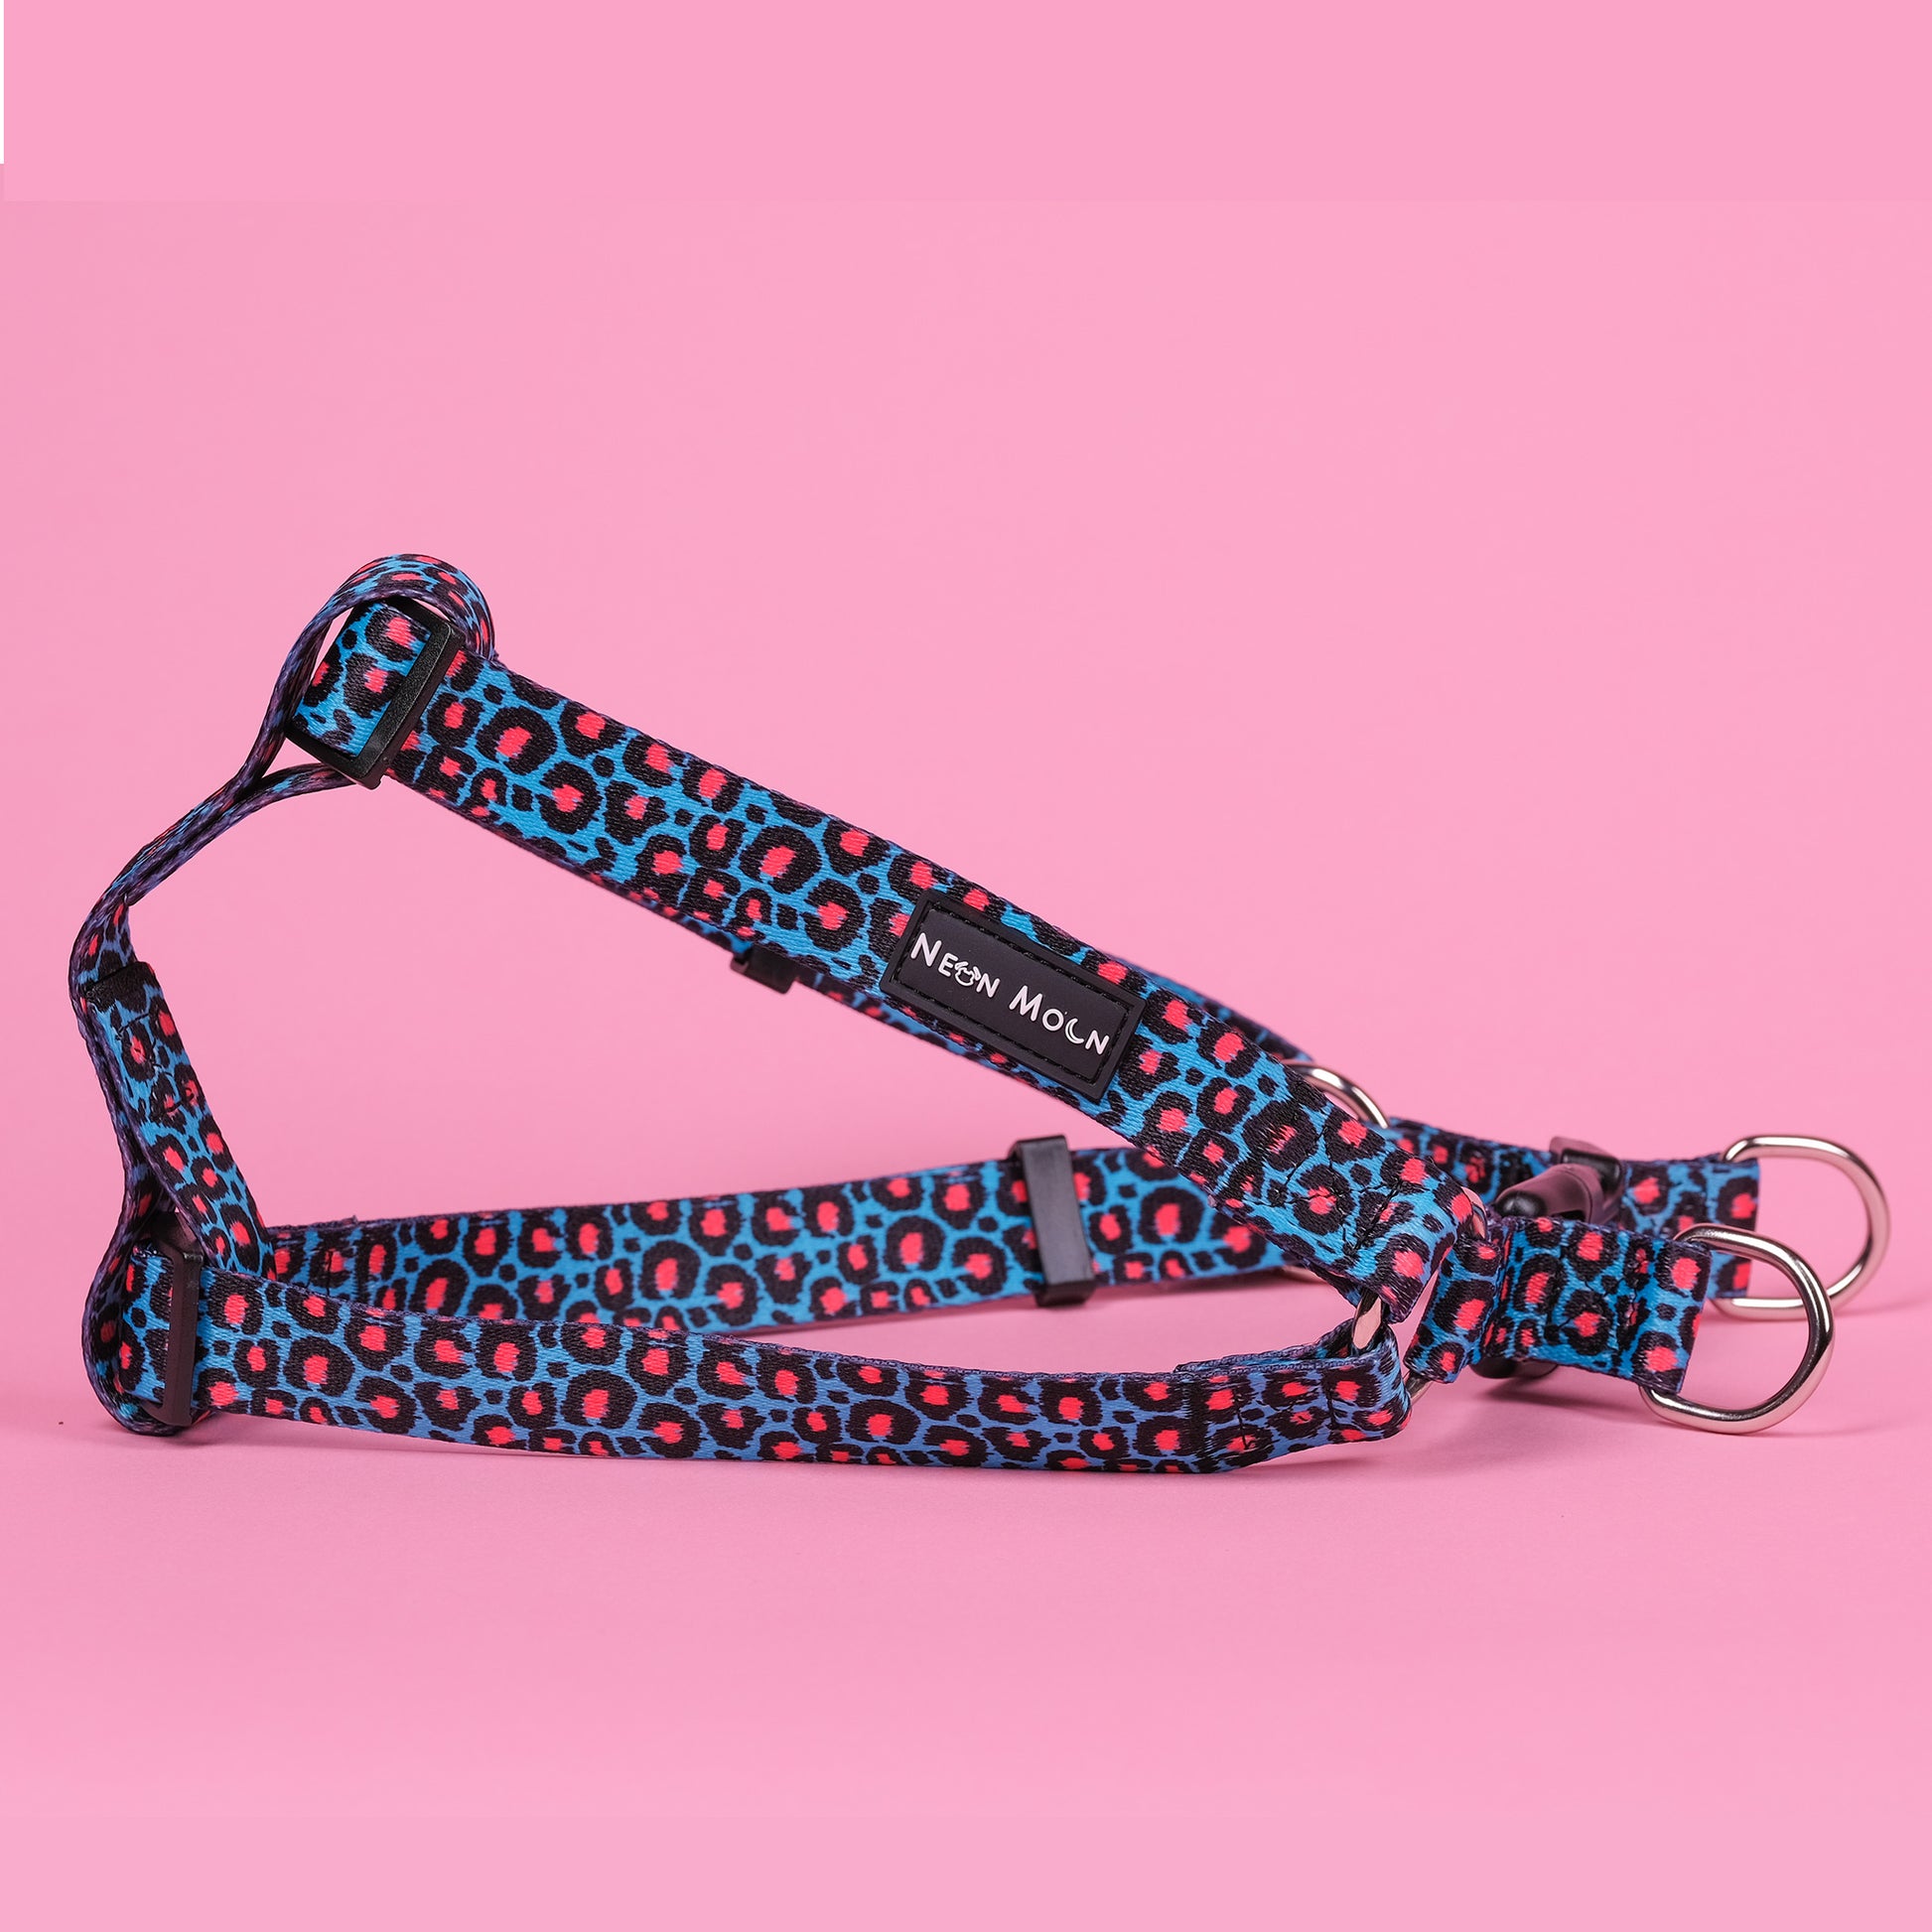 Blue leopard print step-in harness